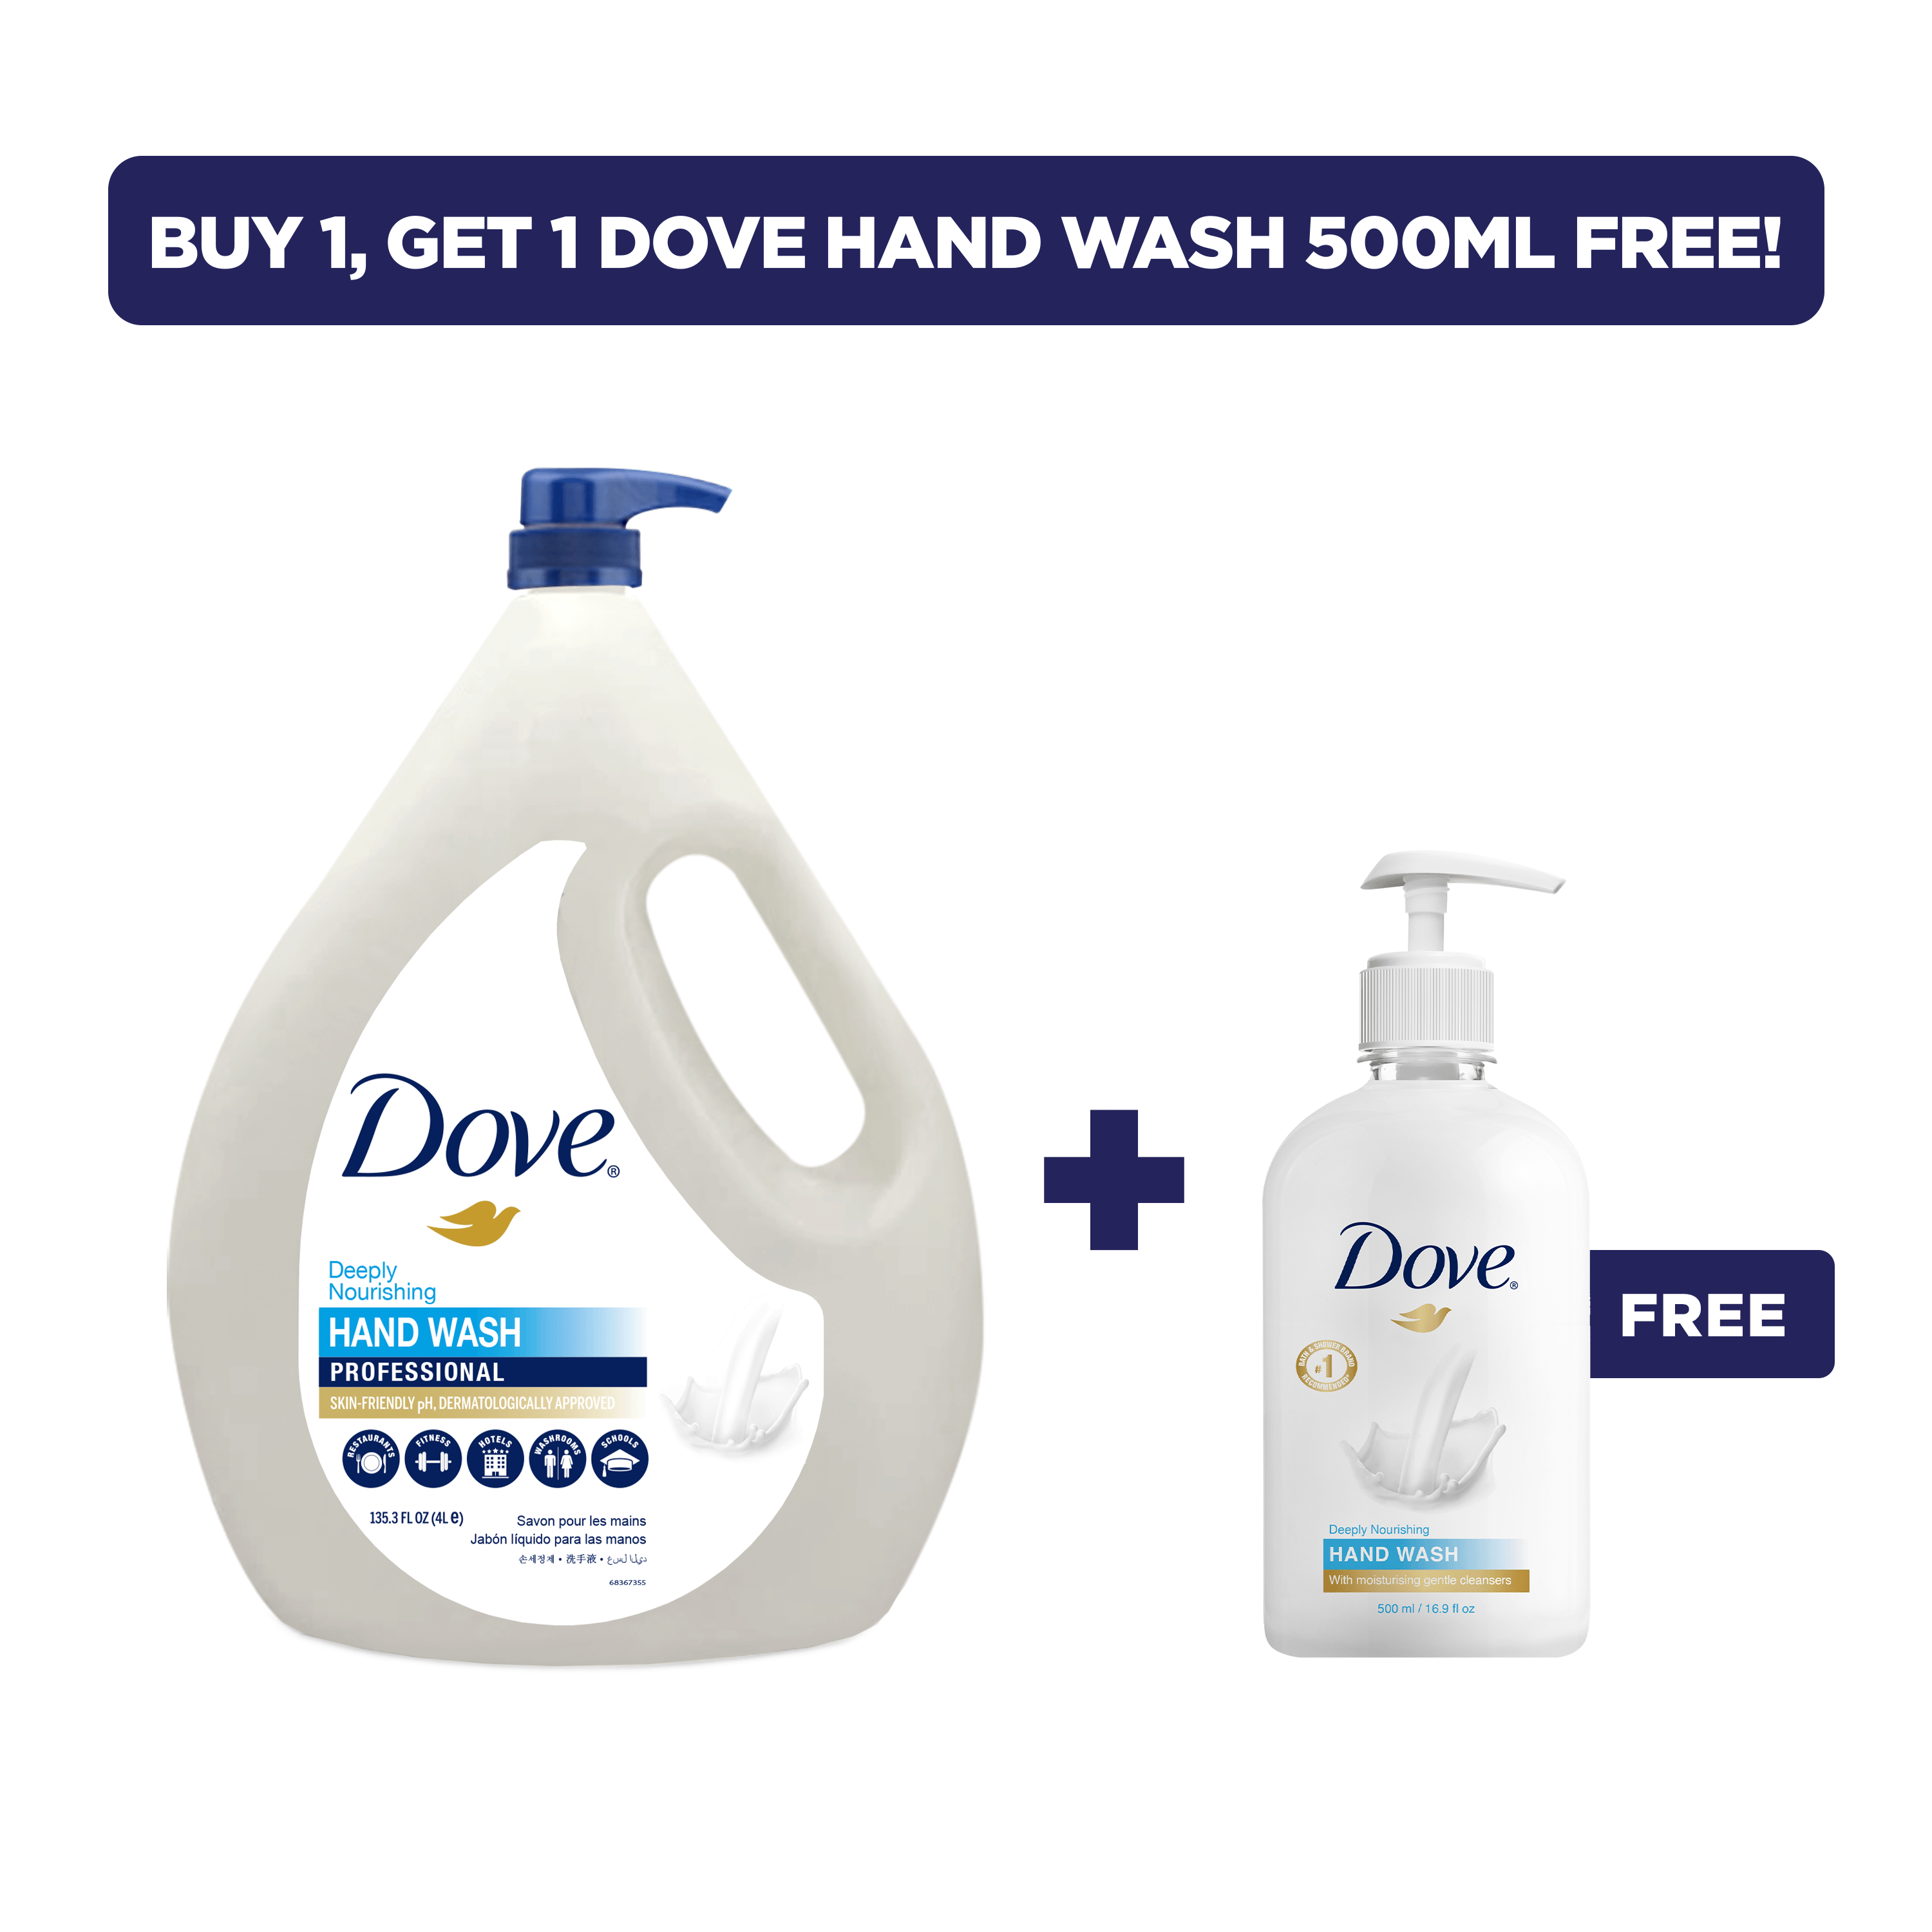 SALE - Dove Hand Wash 2L + FREE 1x Dove Hand Wash 500ml - Unilever Professional Philippines